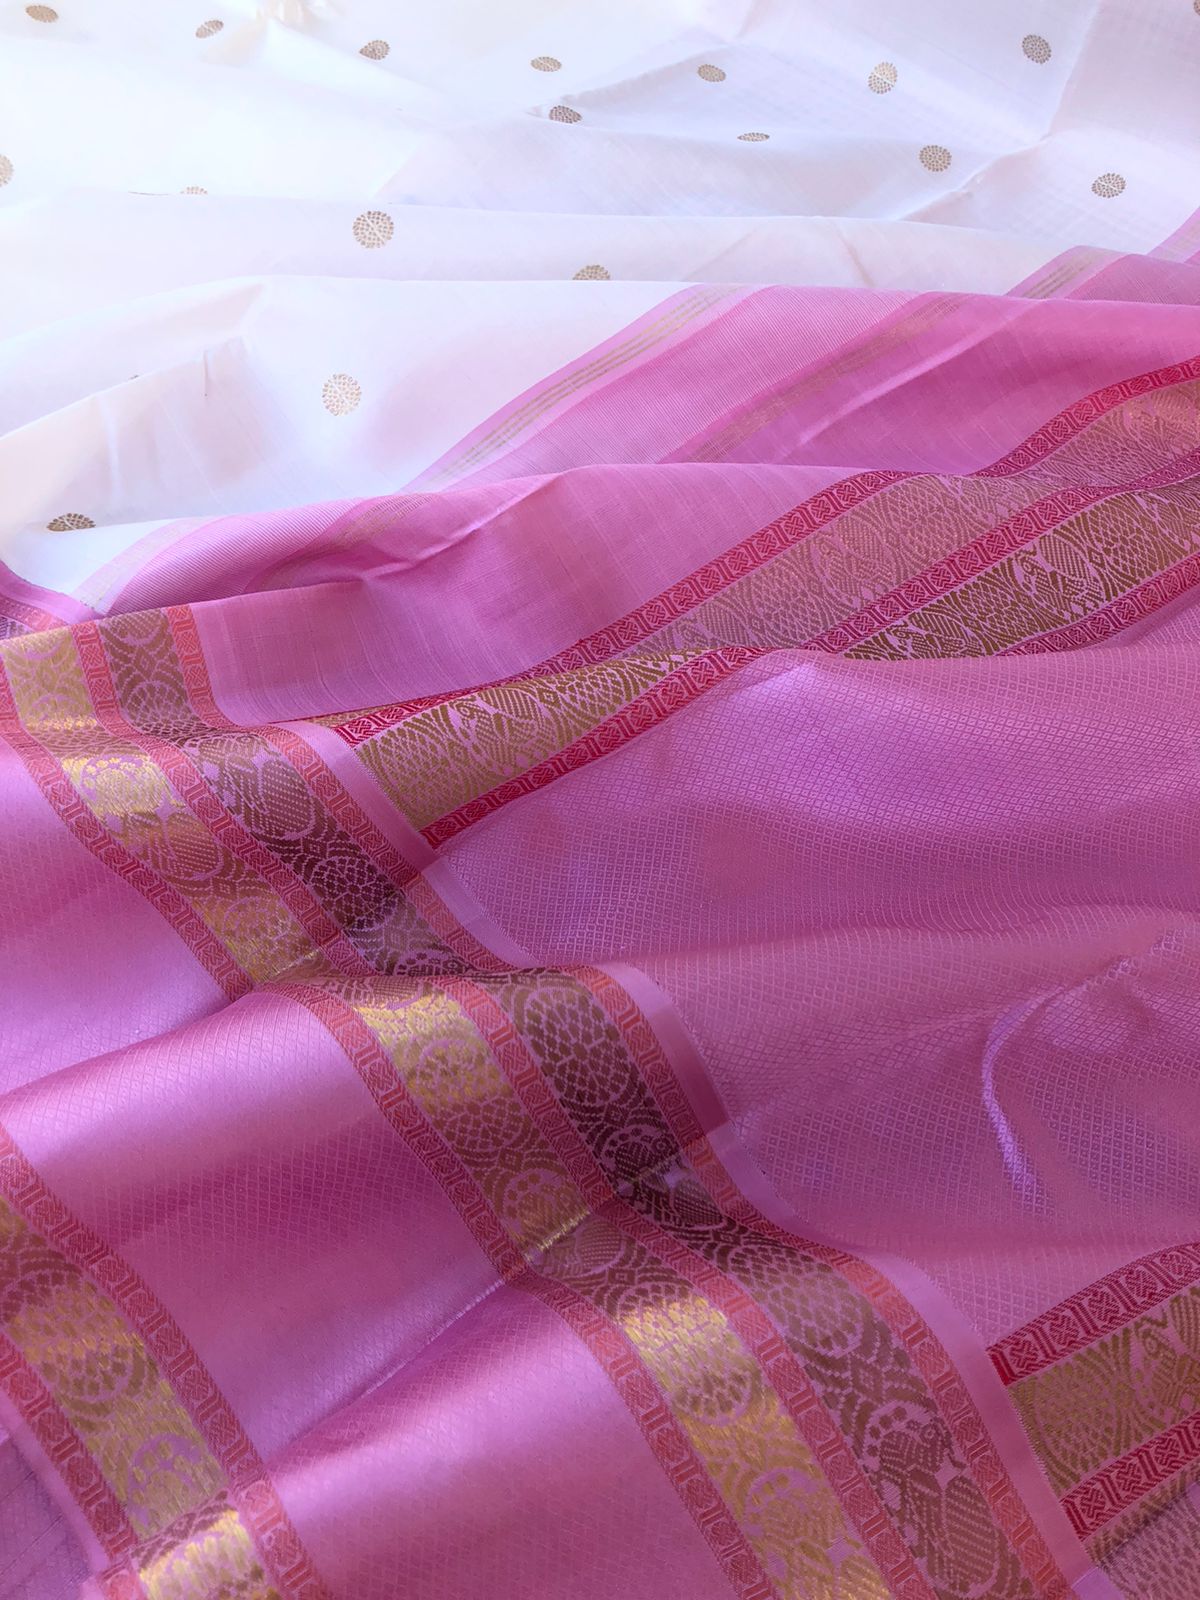 Timeless Classic Kanchivarams - stunning off white and pink korvai Kanchivaram with Lakshadeepam style woven blouse